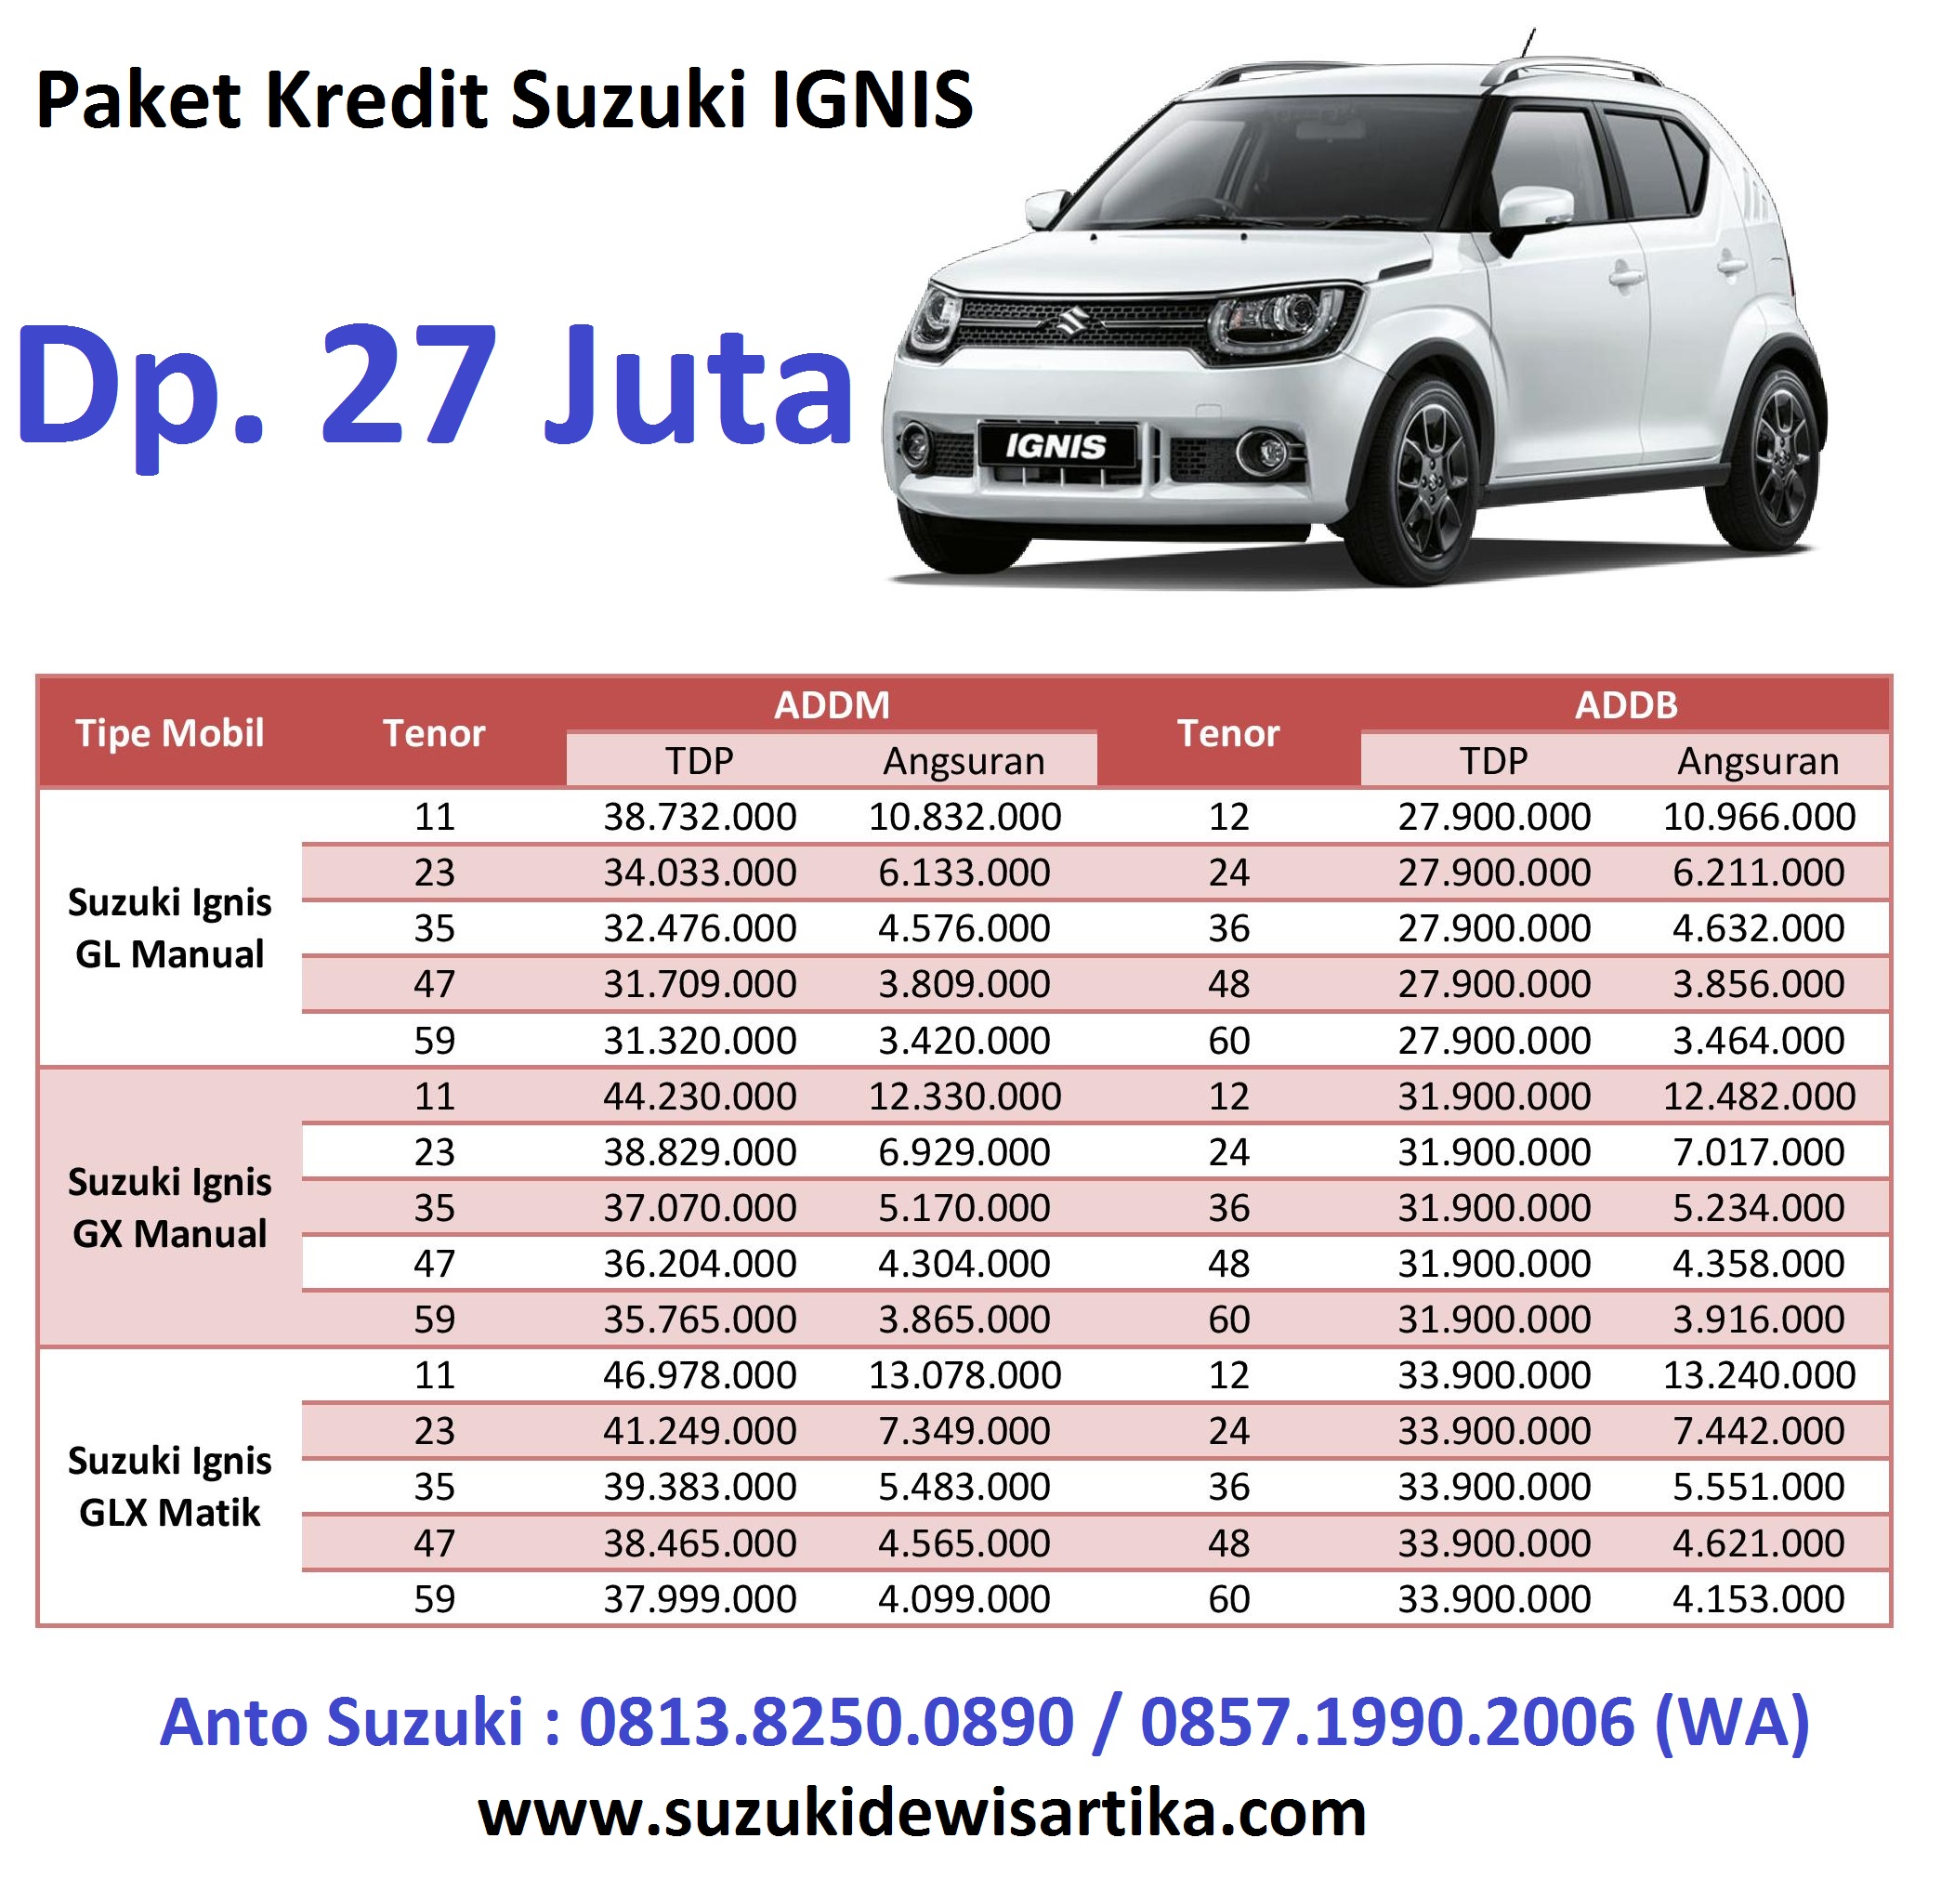 Paket Kredit Suzuki IGNIS